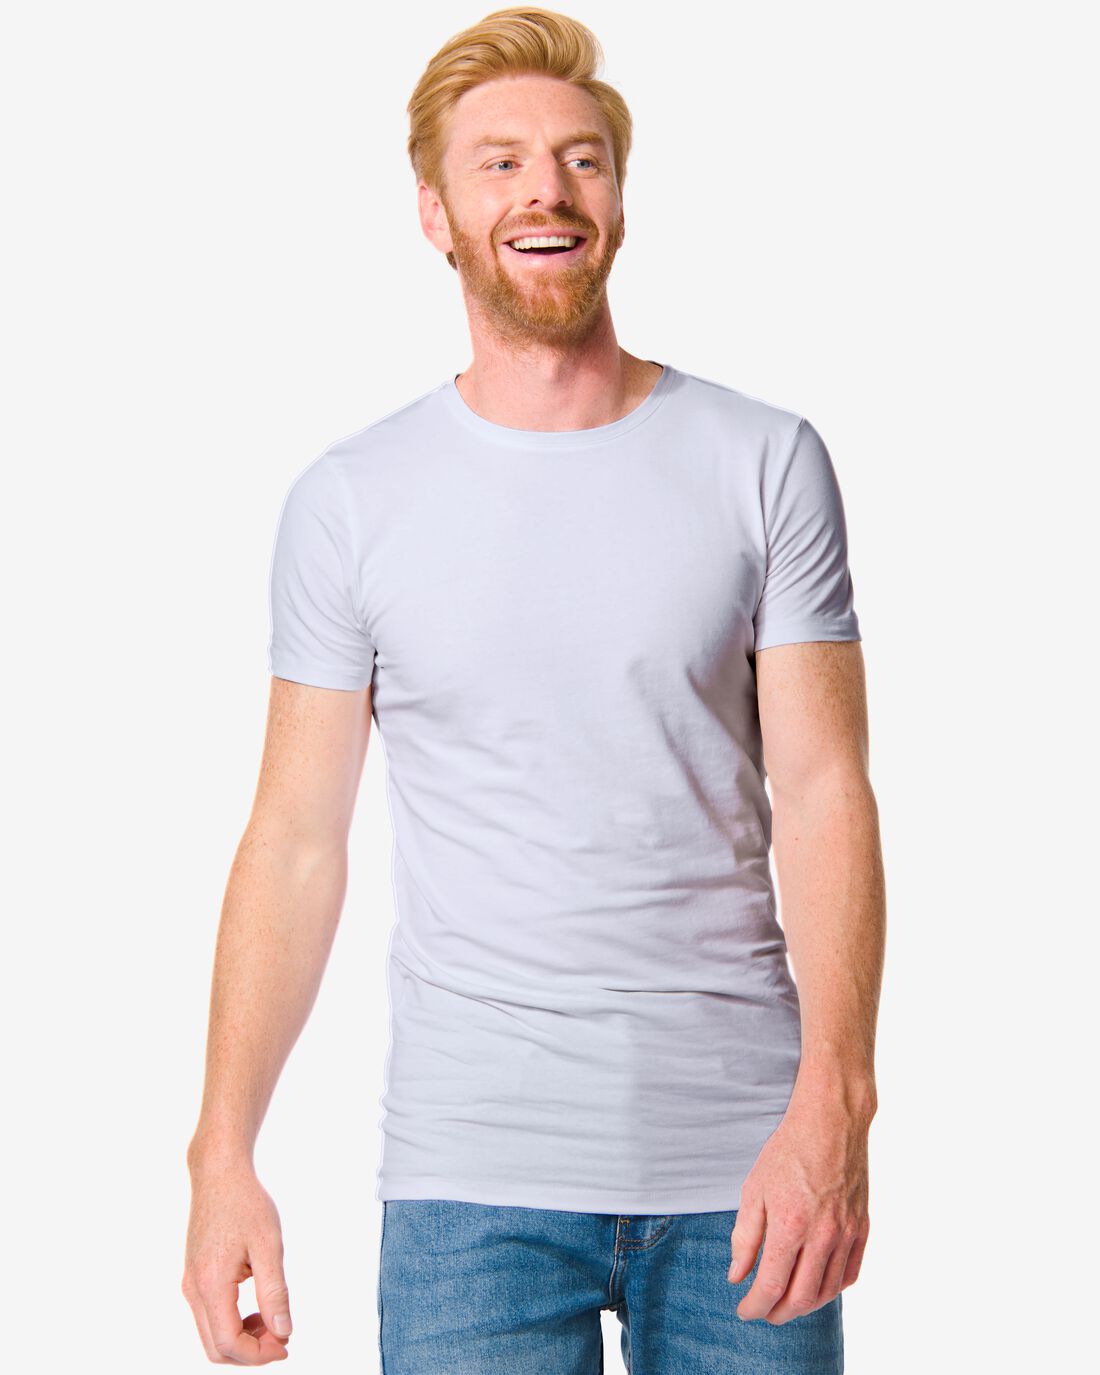 HEMA Heren T-shirt Slim Fit O-hals Extra Lang Wit (wit)